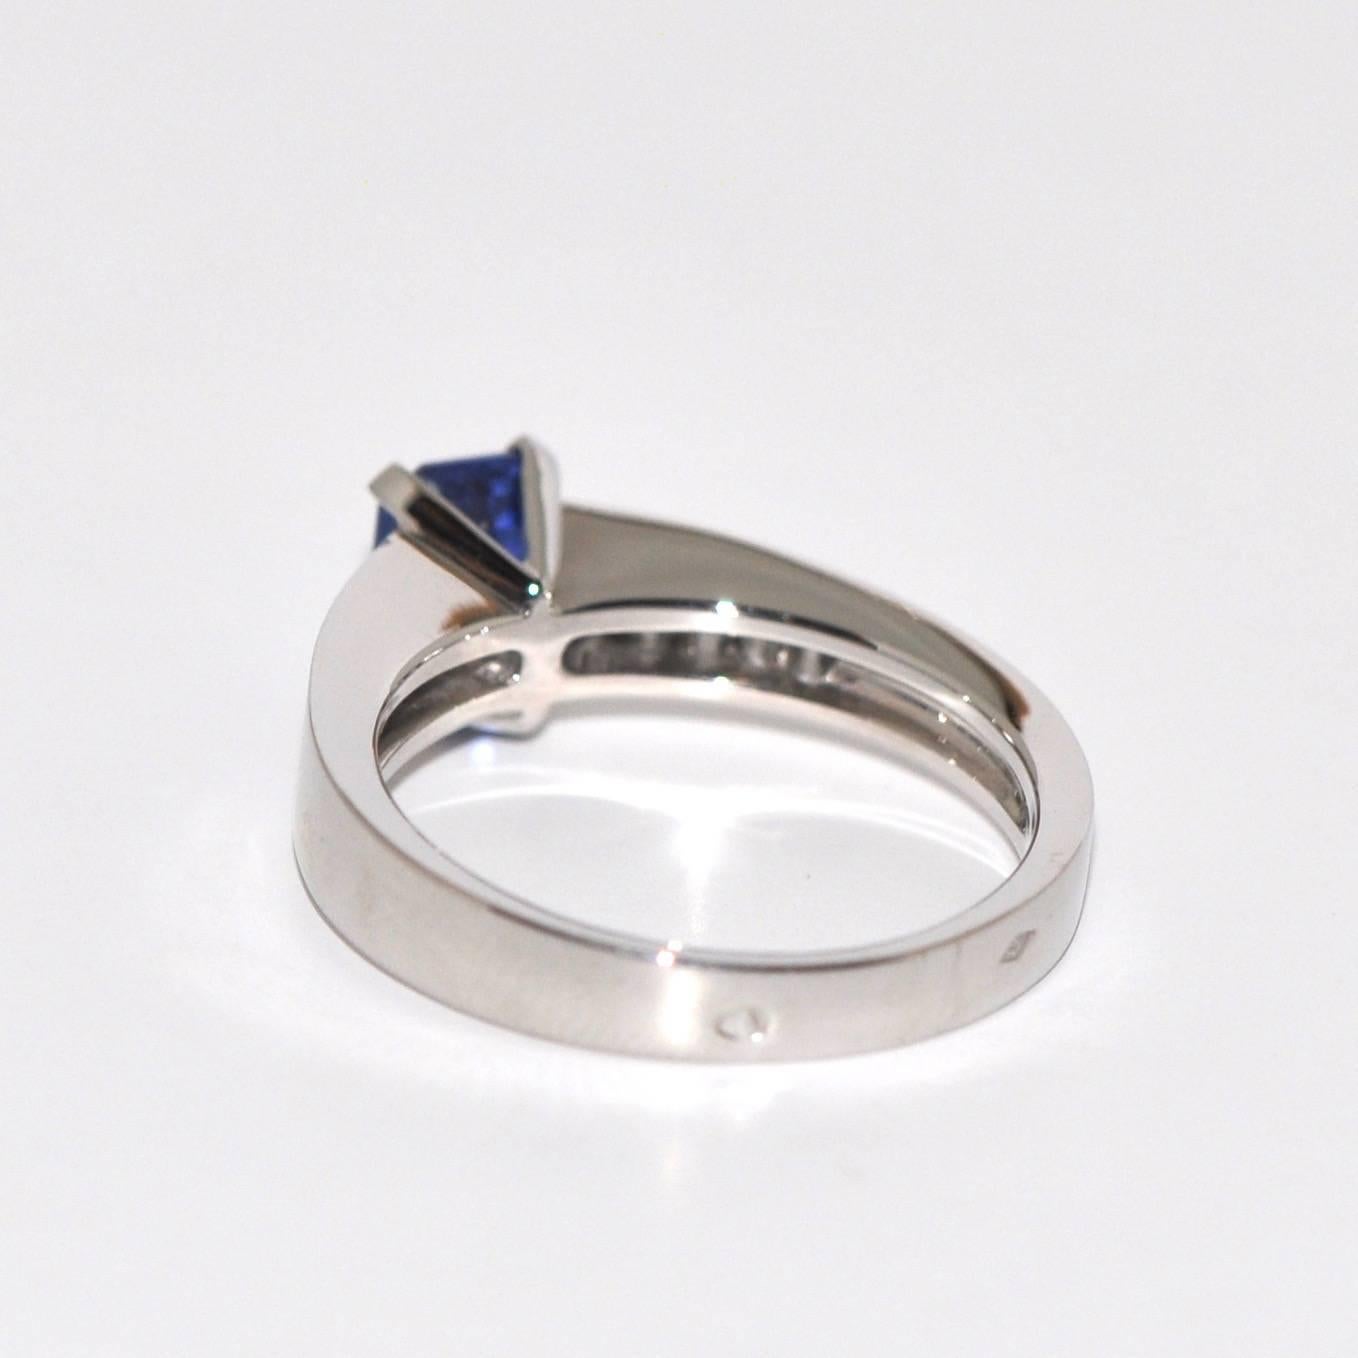 Baguette Cut Blue Sapphire Emerald Size , White Diamonds , White Gold Ring